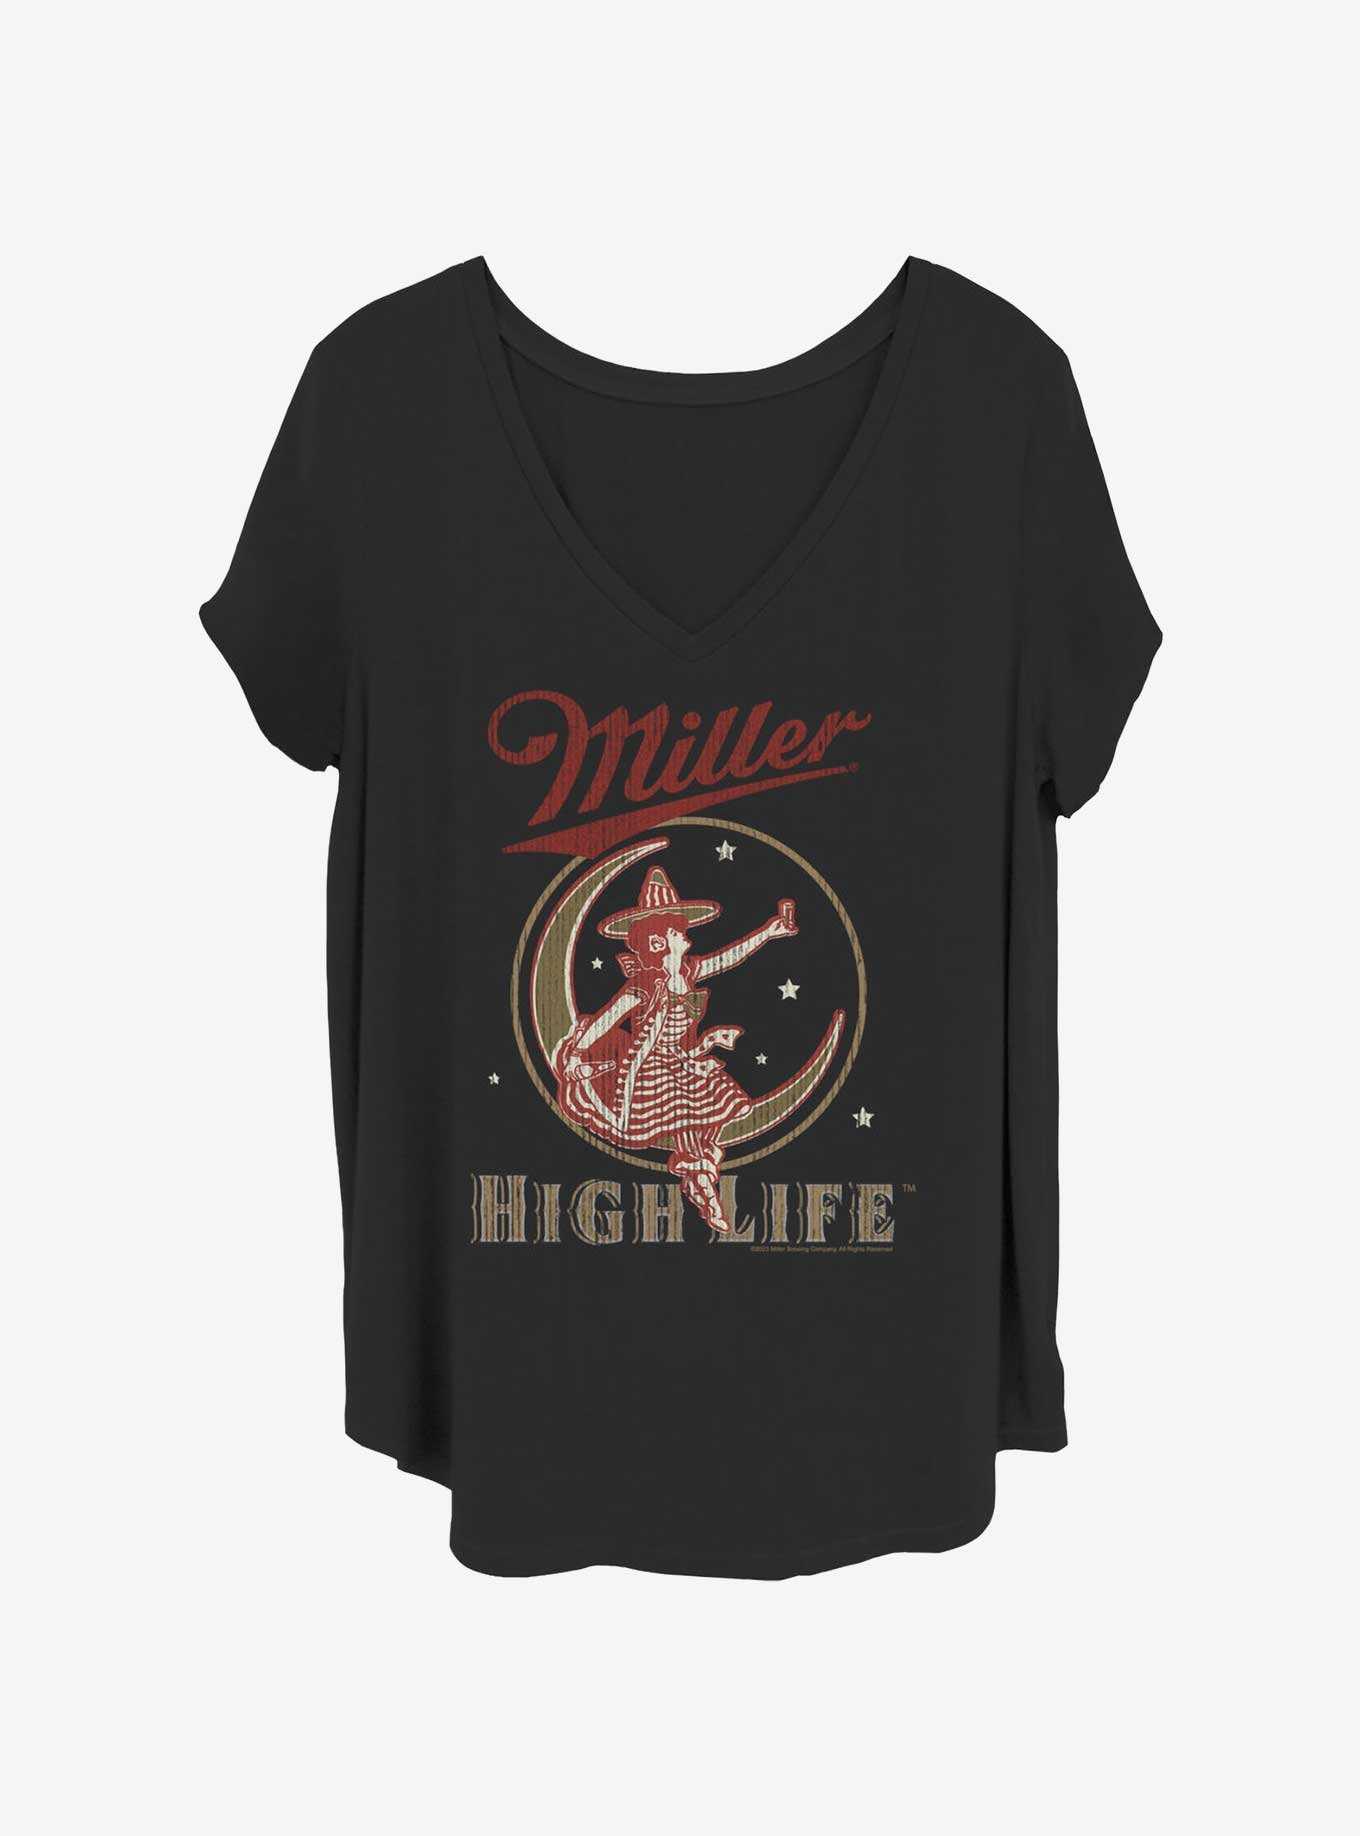 Coors Miller Moon Girls T-Shirt Plus Size, , hi-res